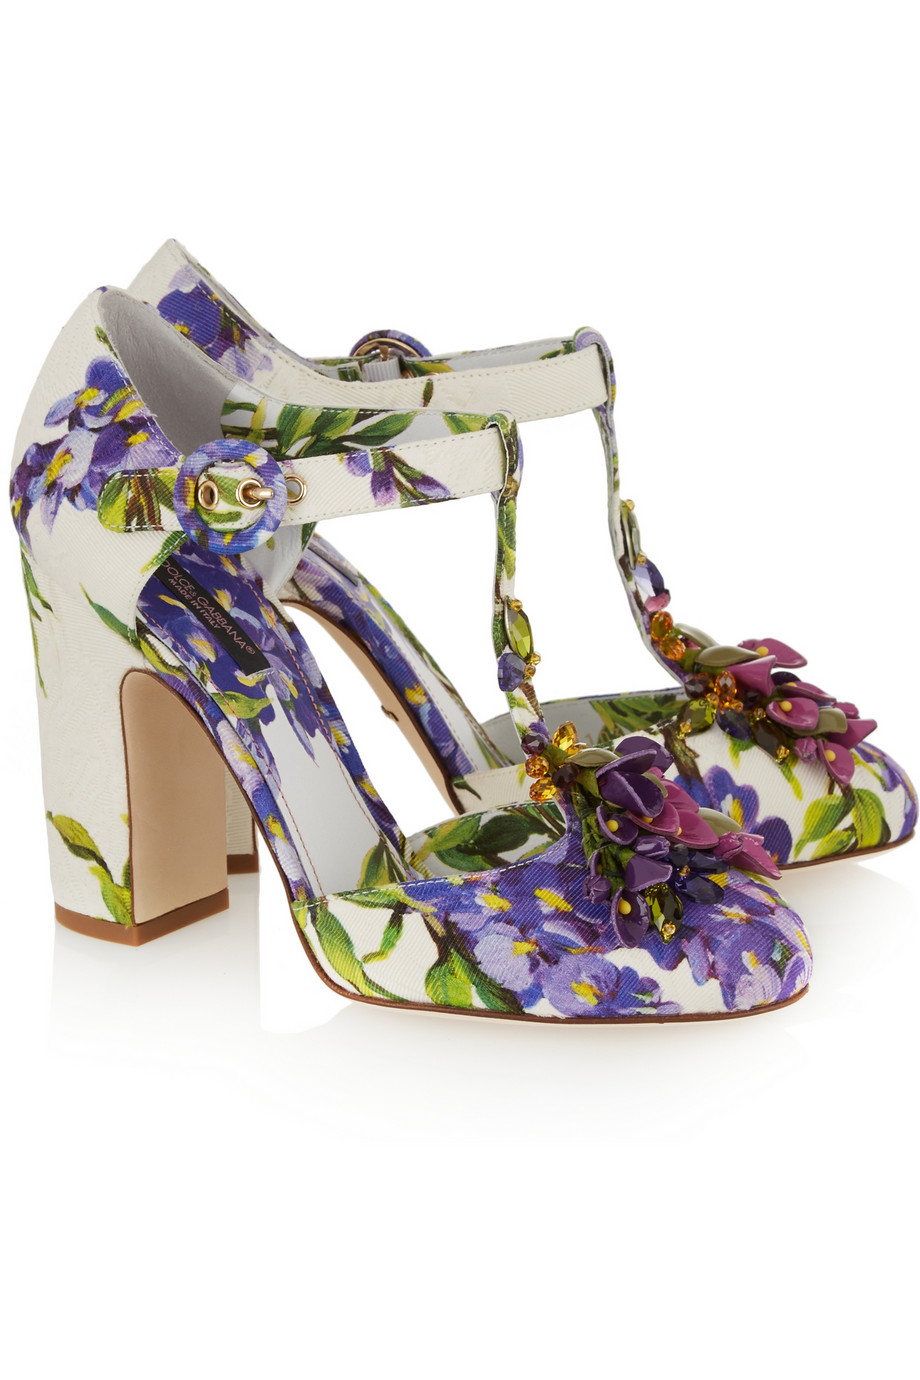 Dolce & Gabbana Embellished Floral-Print Brocade T-Bar Pumps in Purple |  Lyst